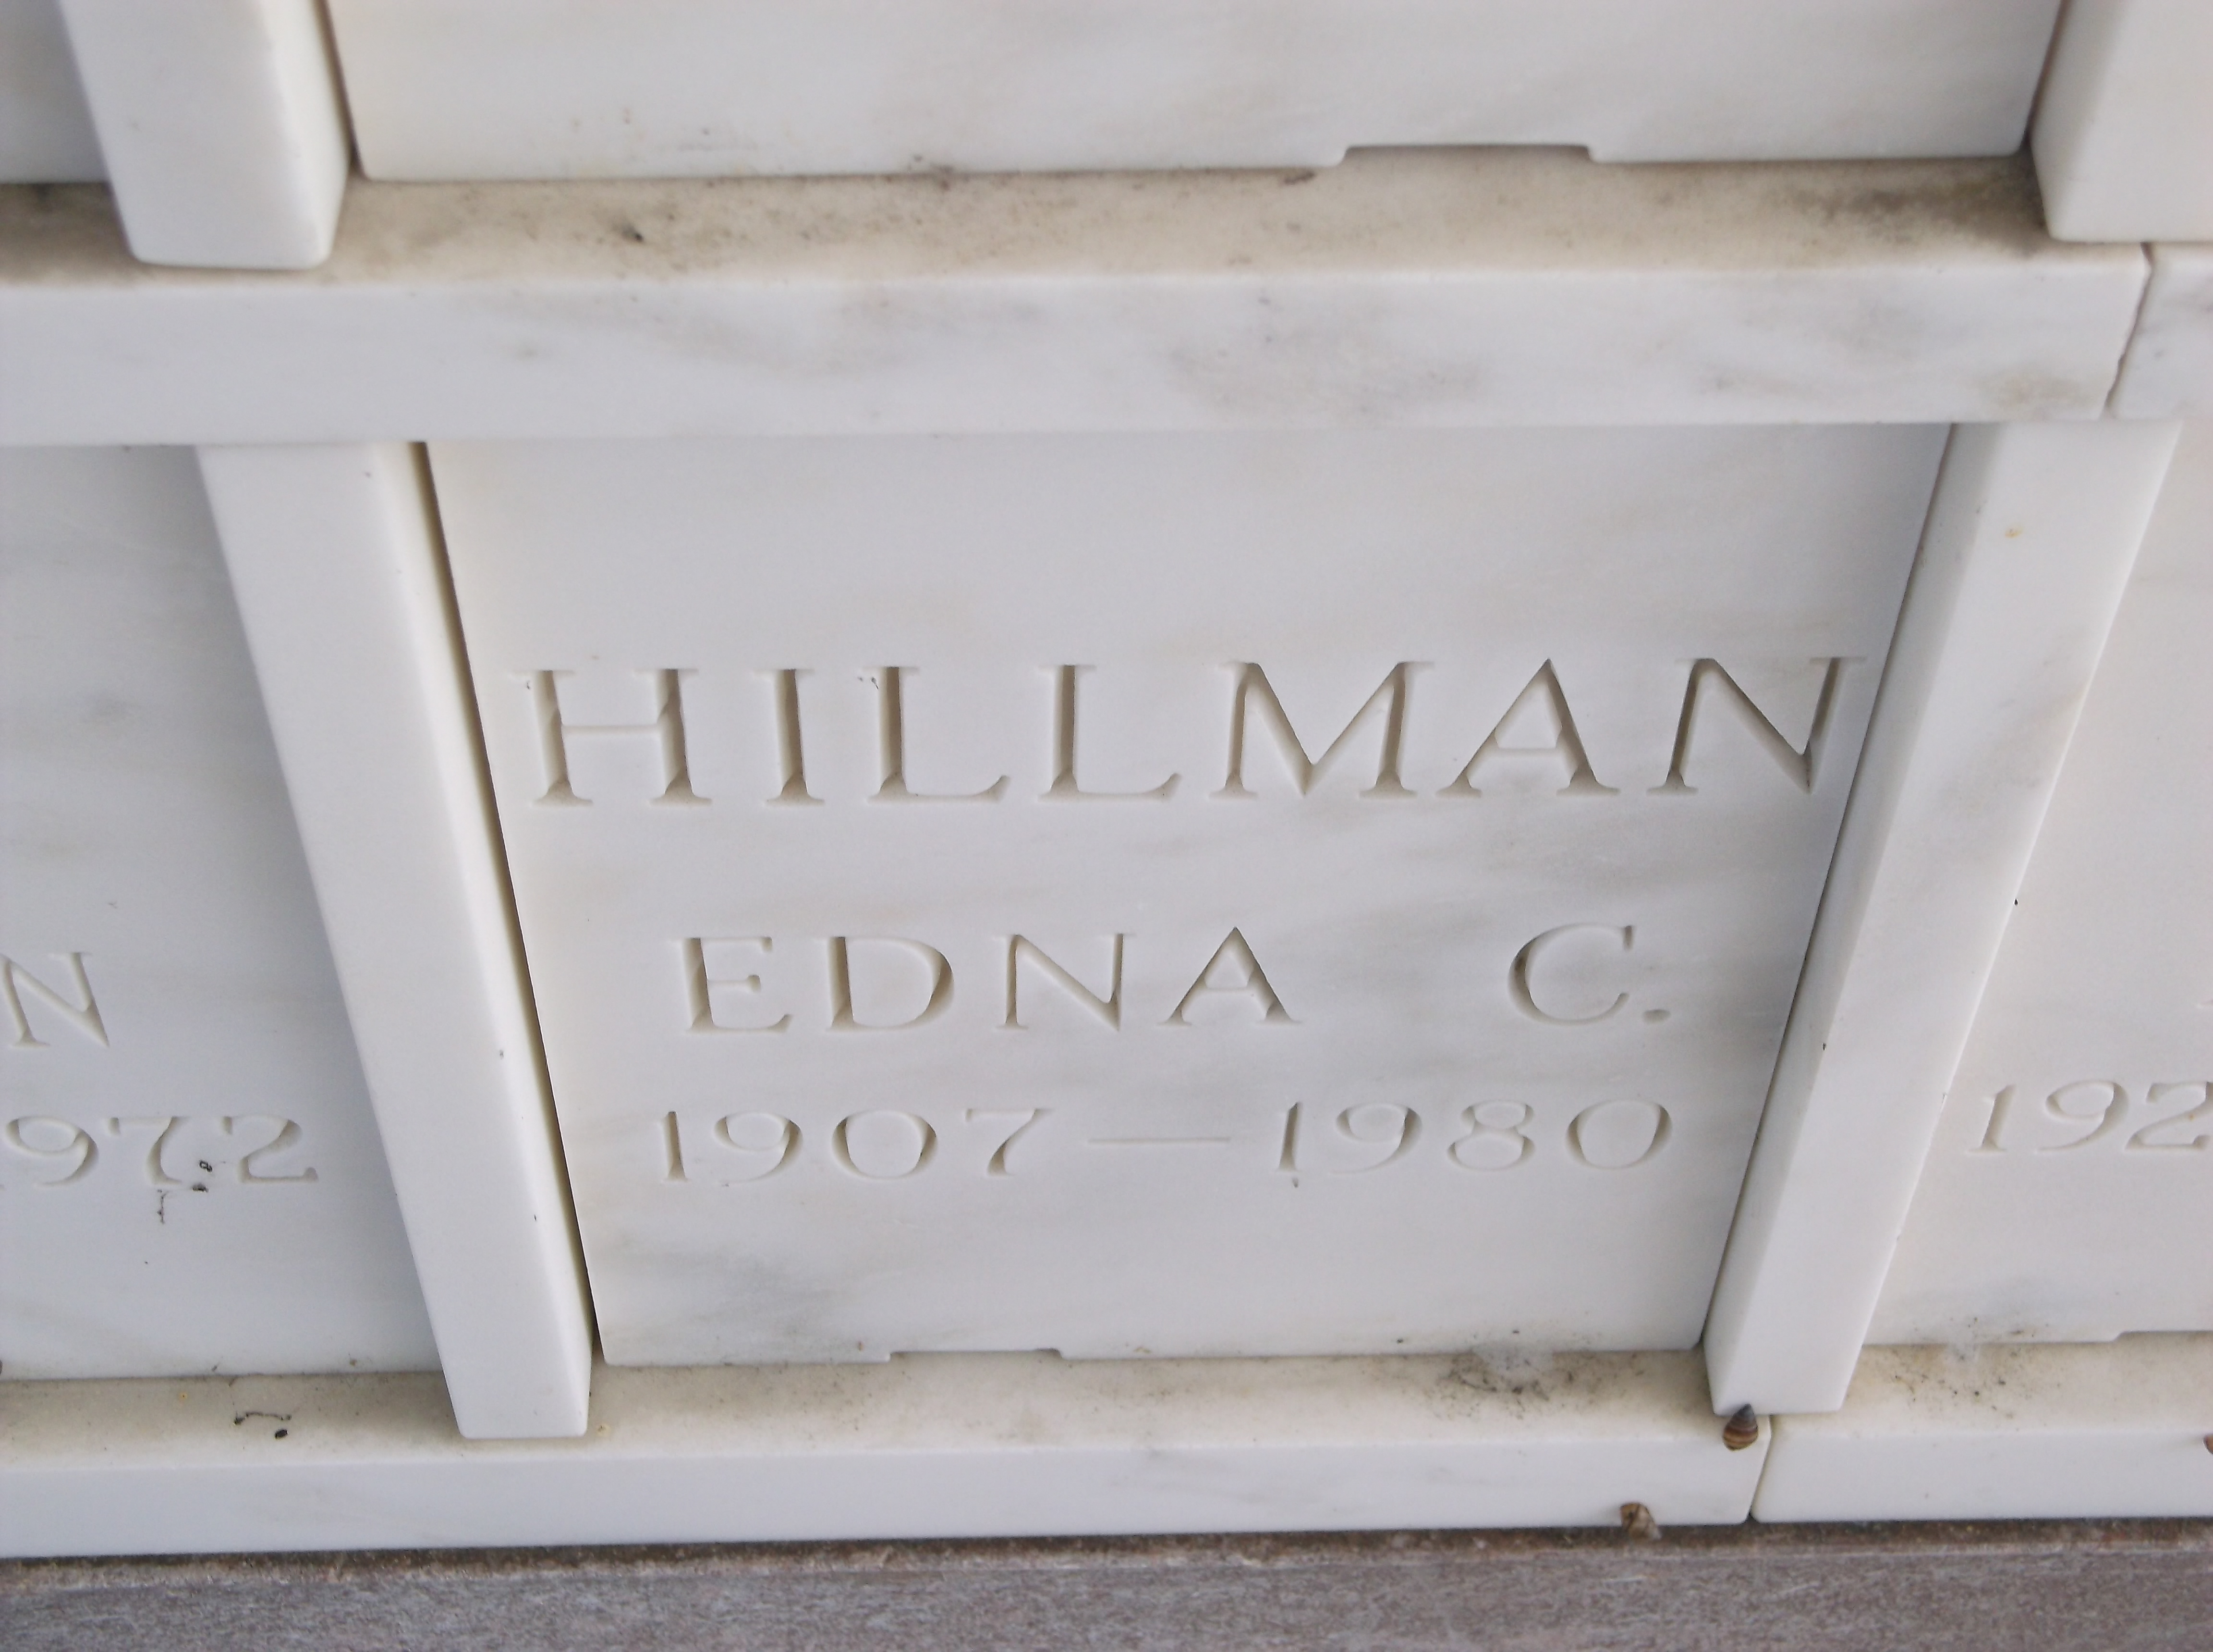 Edna C Hillman